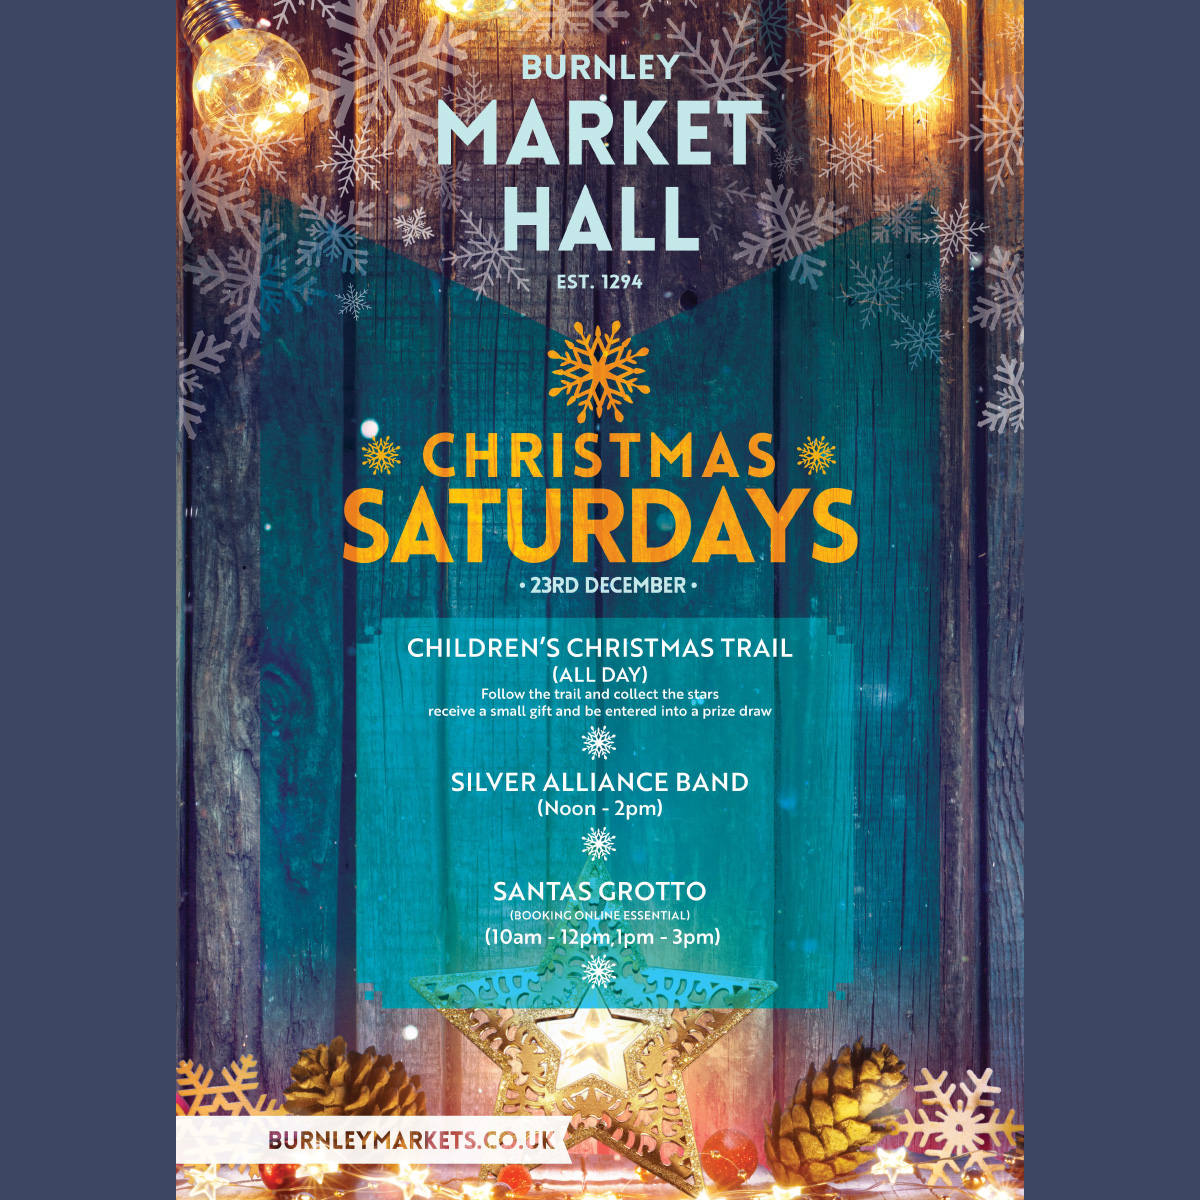 Burnley Market Hall Christmas Saturdays – 23rd December